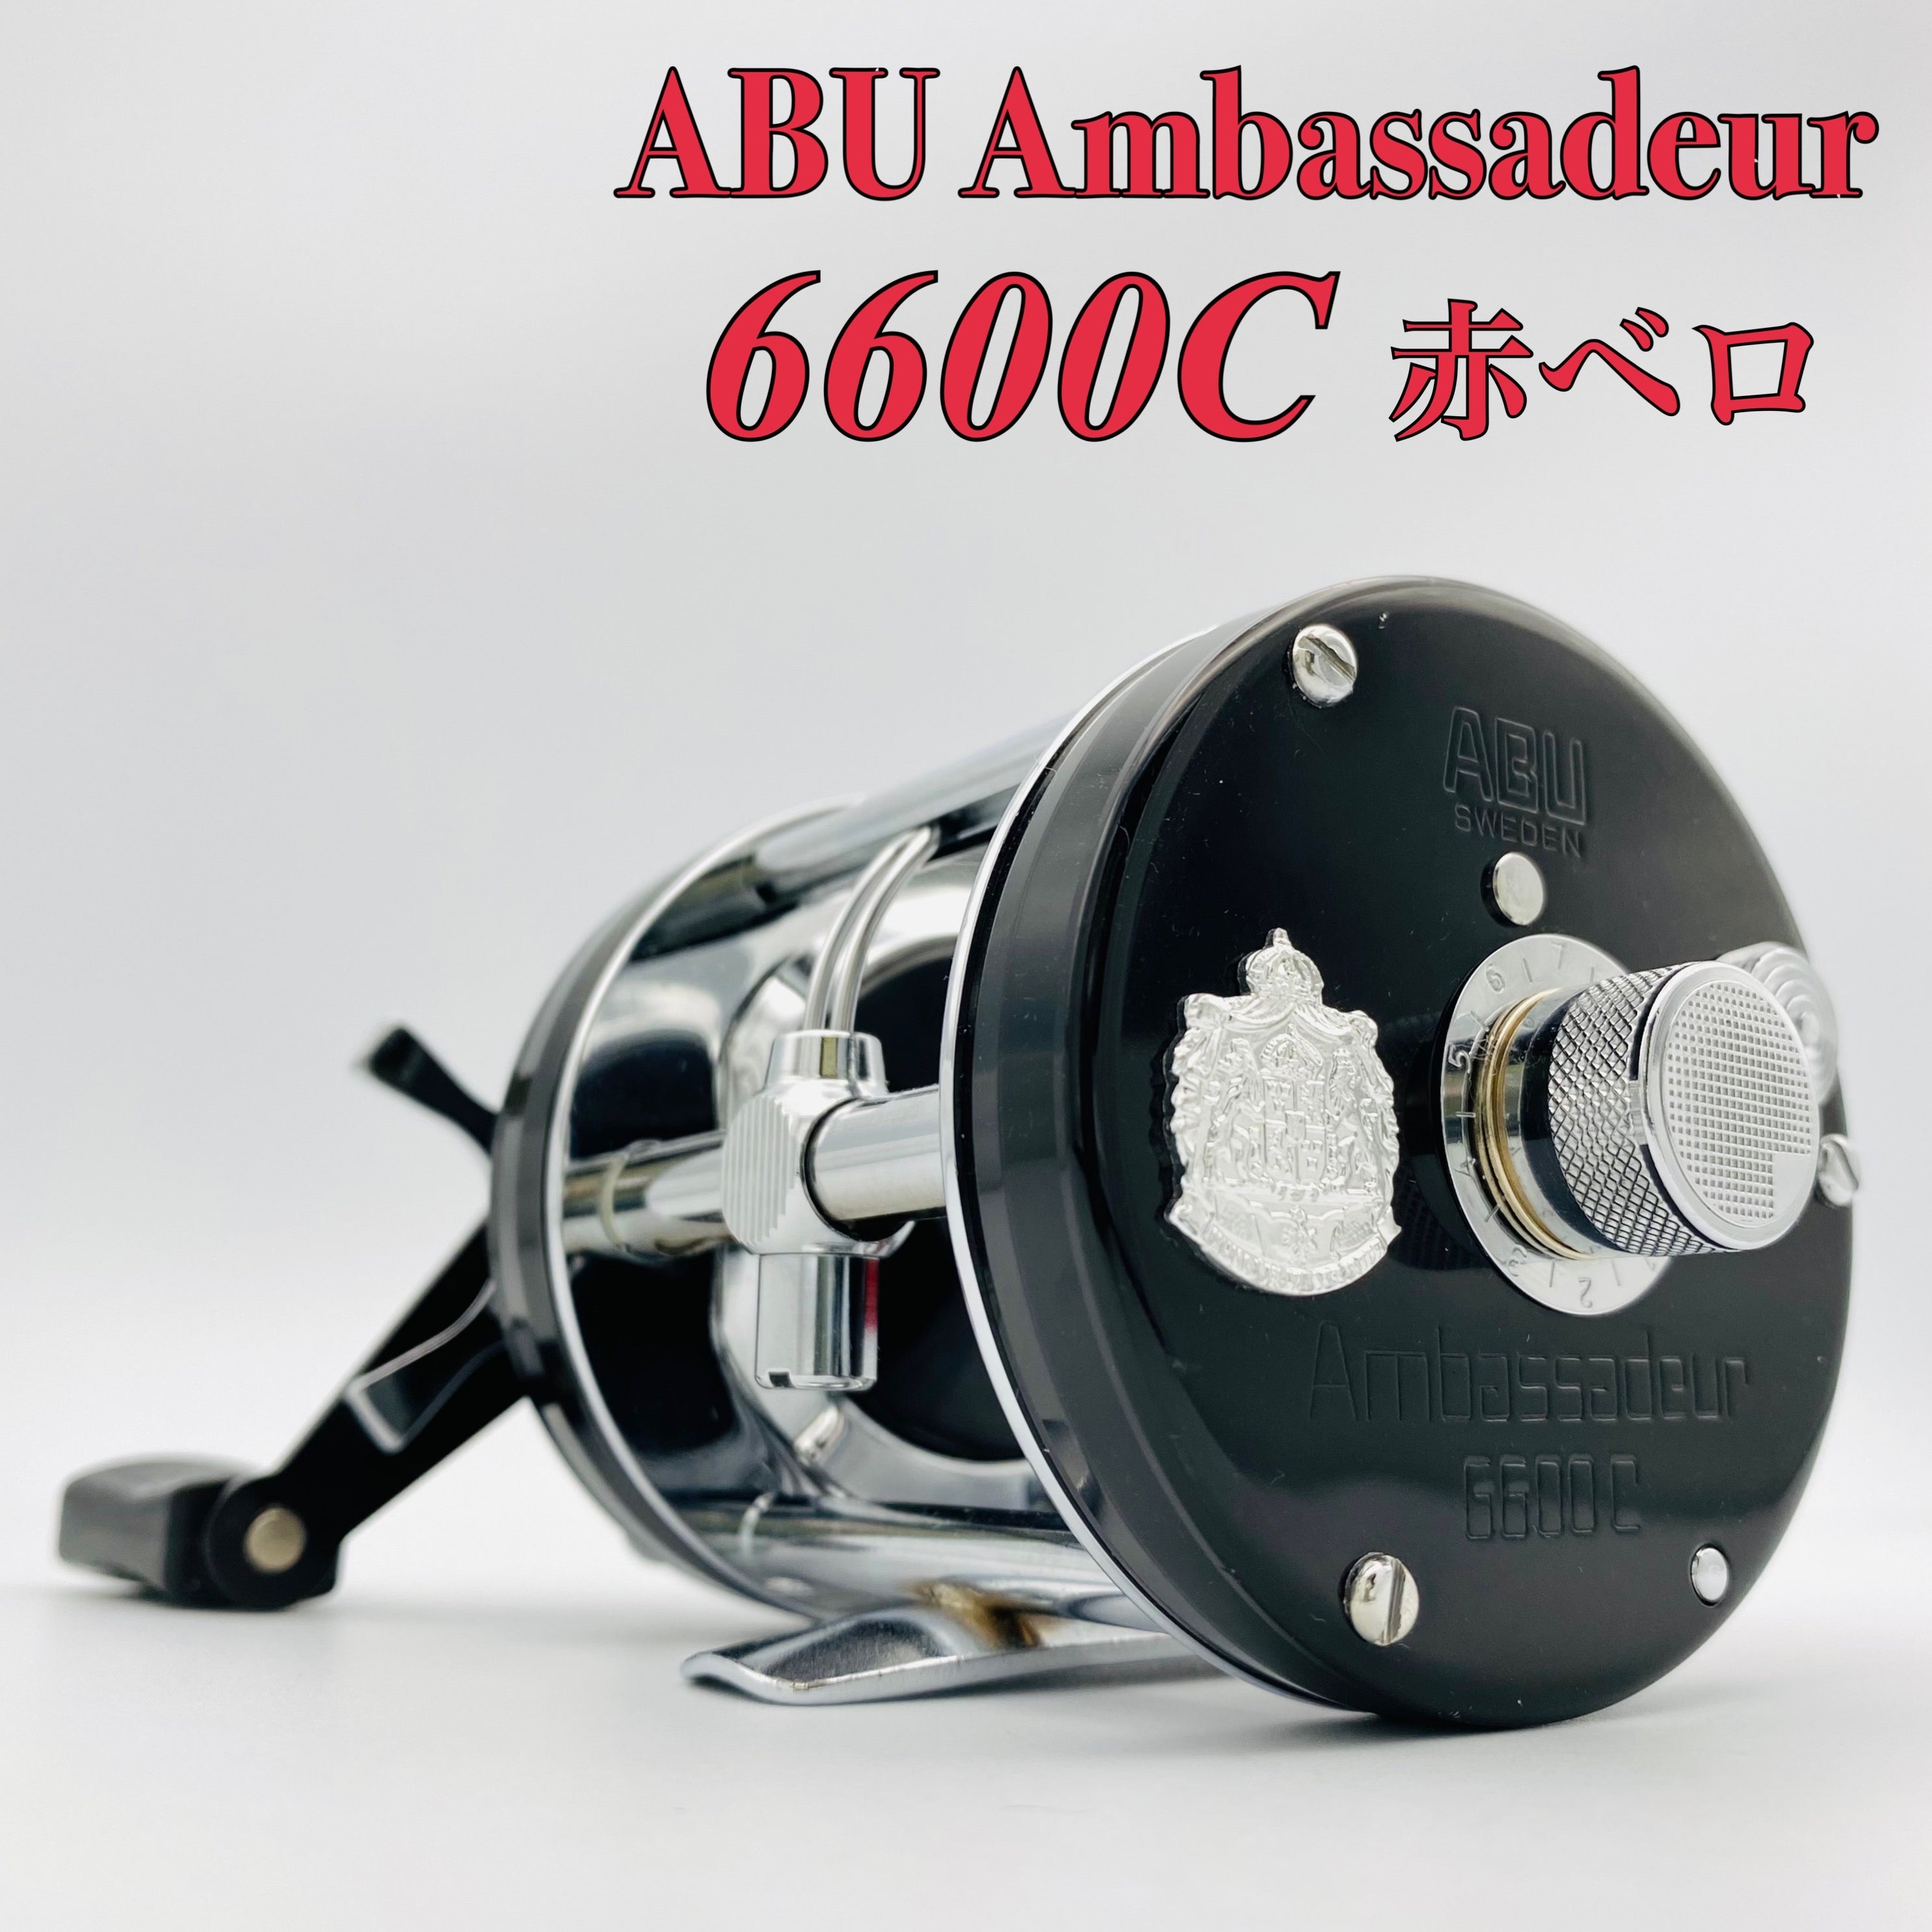 Abu ambassadeur 6600C  ブラック 赤ベロ